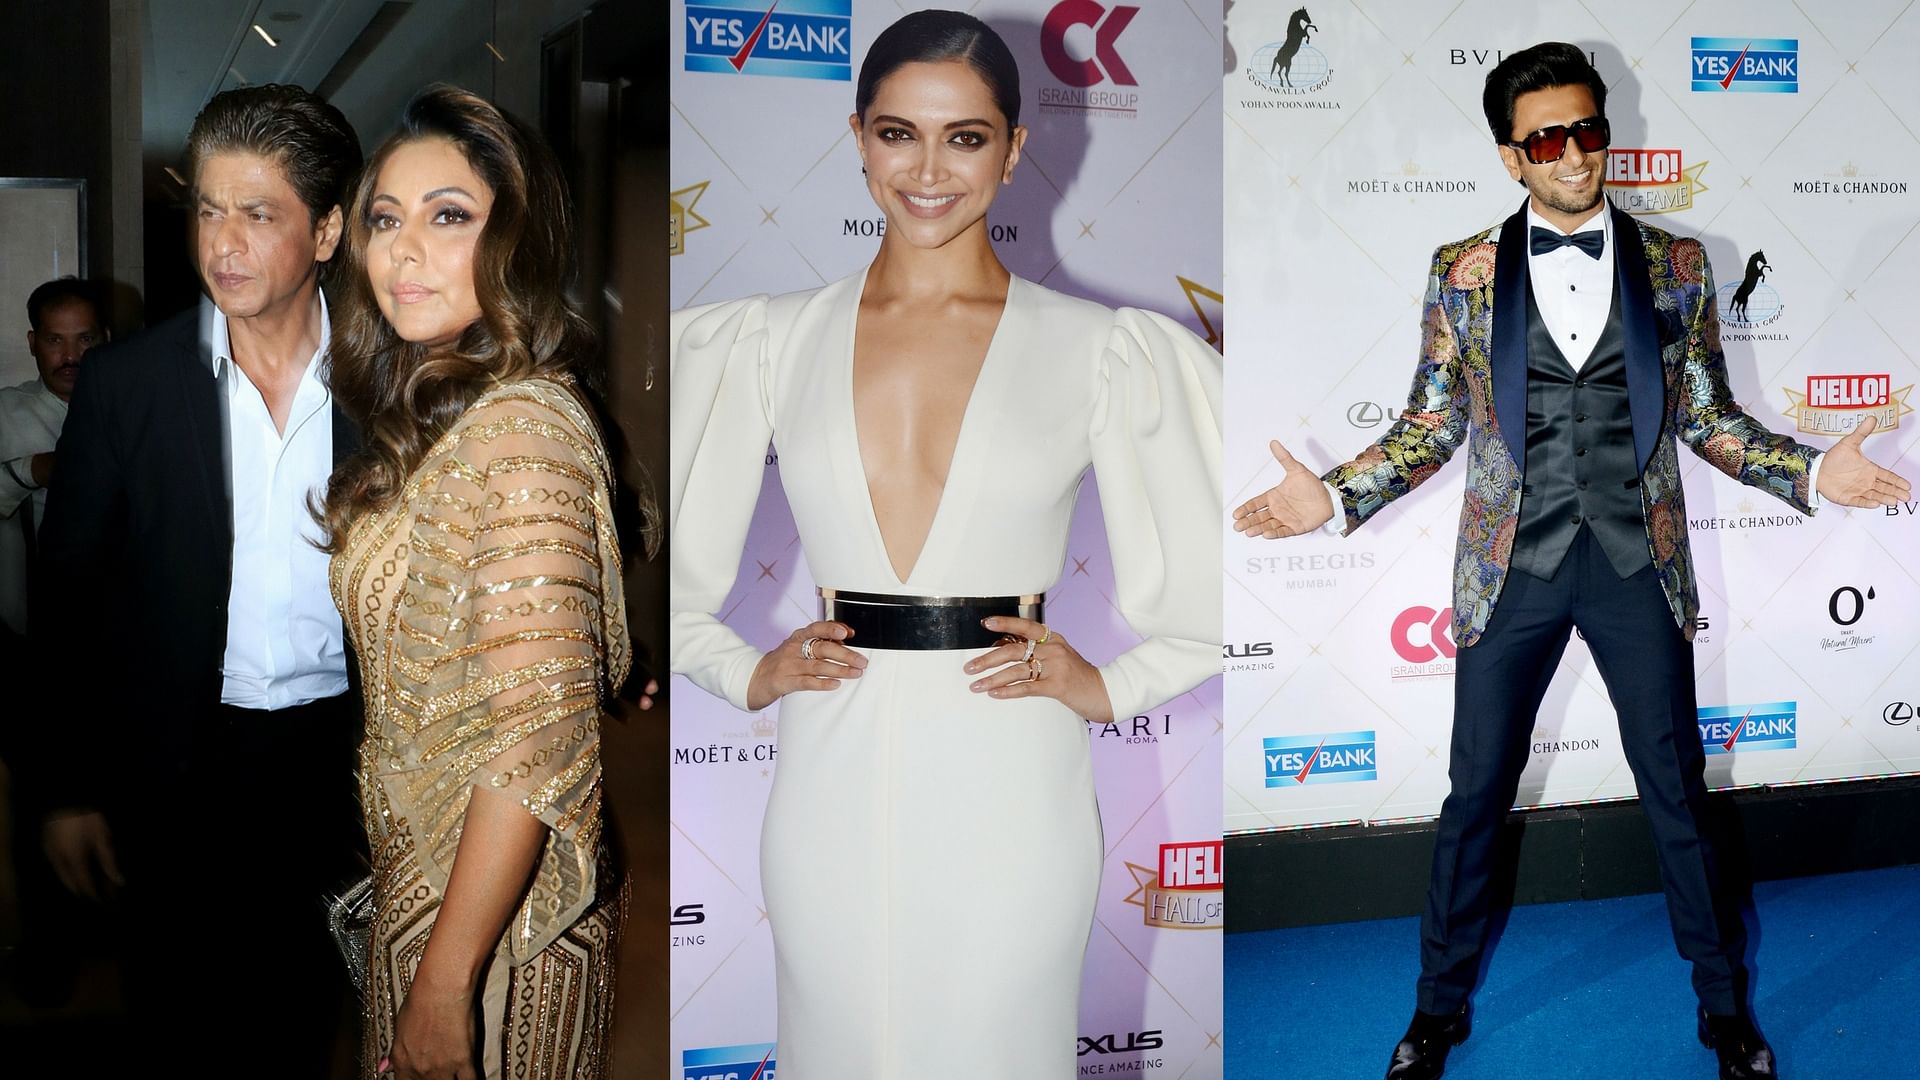 Shah Rukh Khan with Gauri Khan; Deepika Padukone; Ranveer Singh at the Hall of Fame Awards.